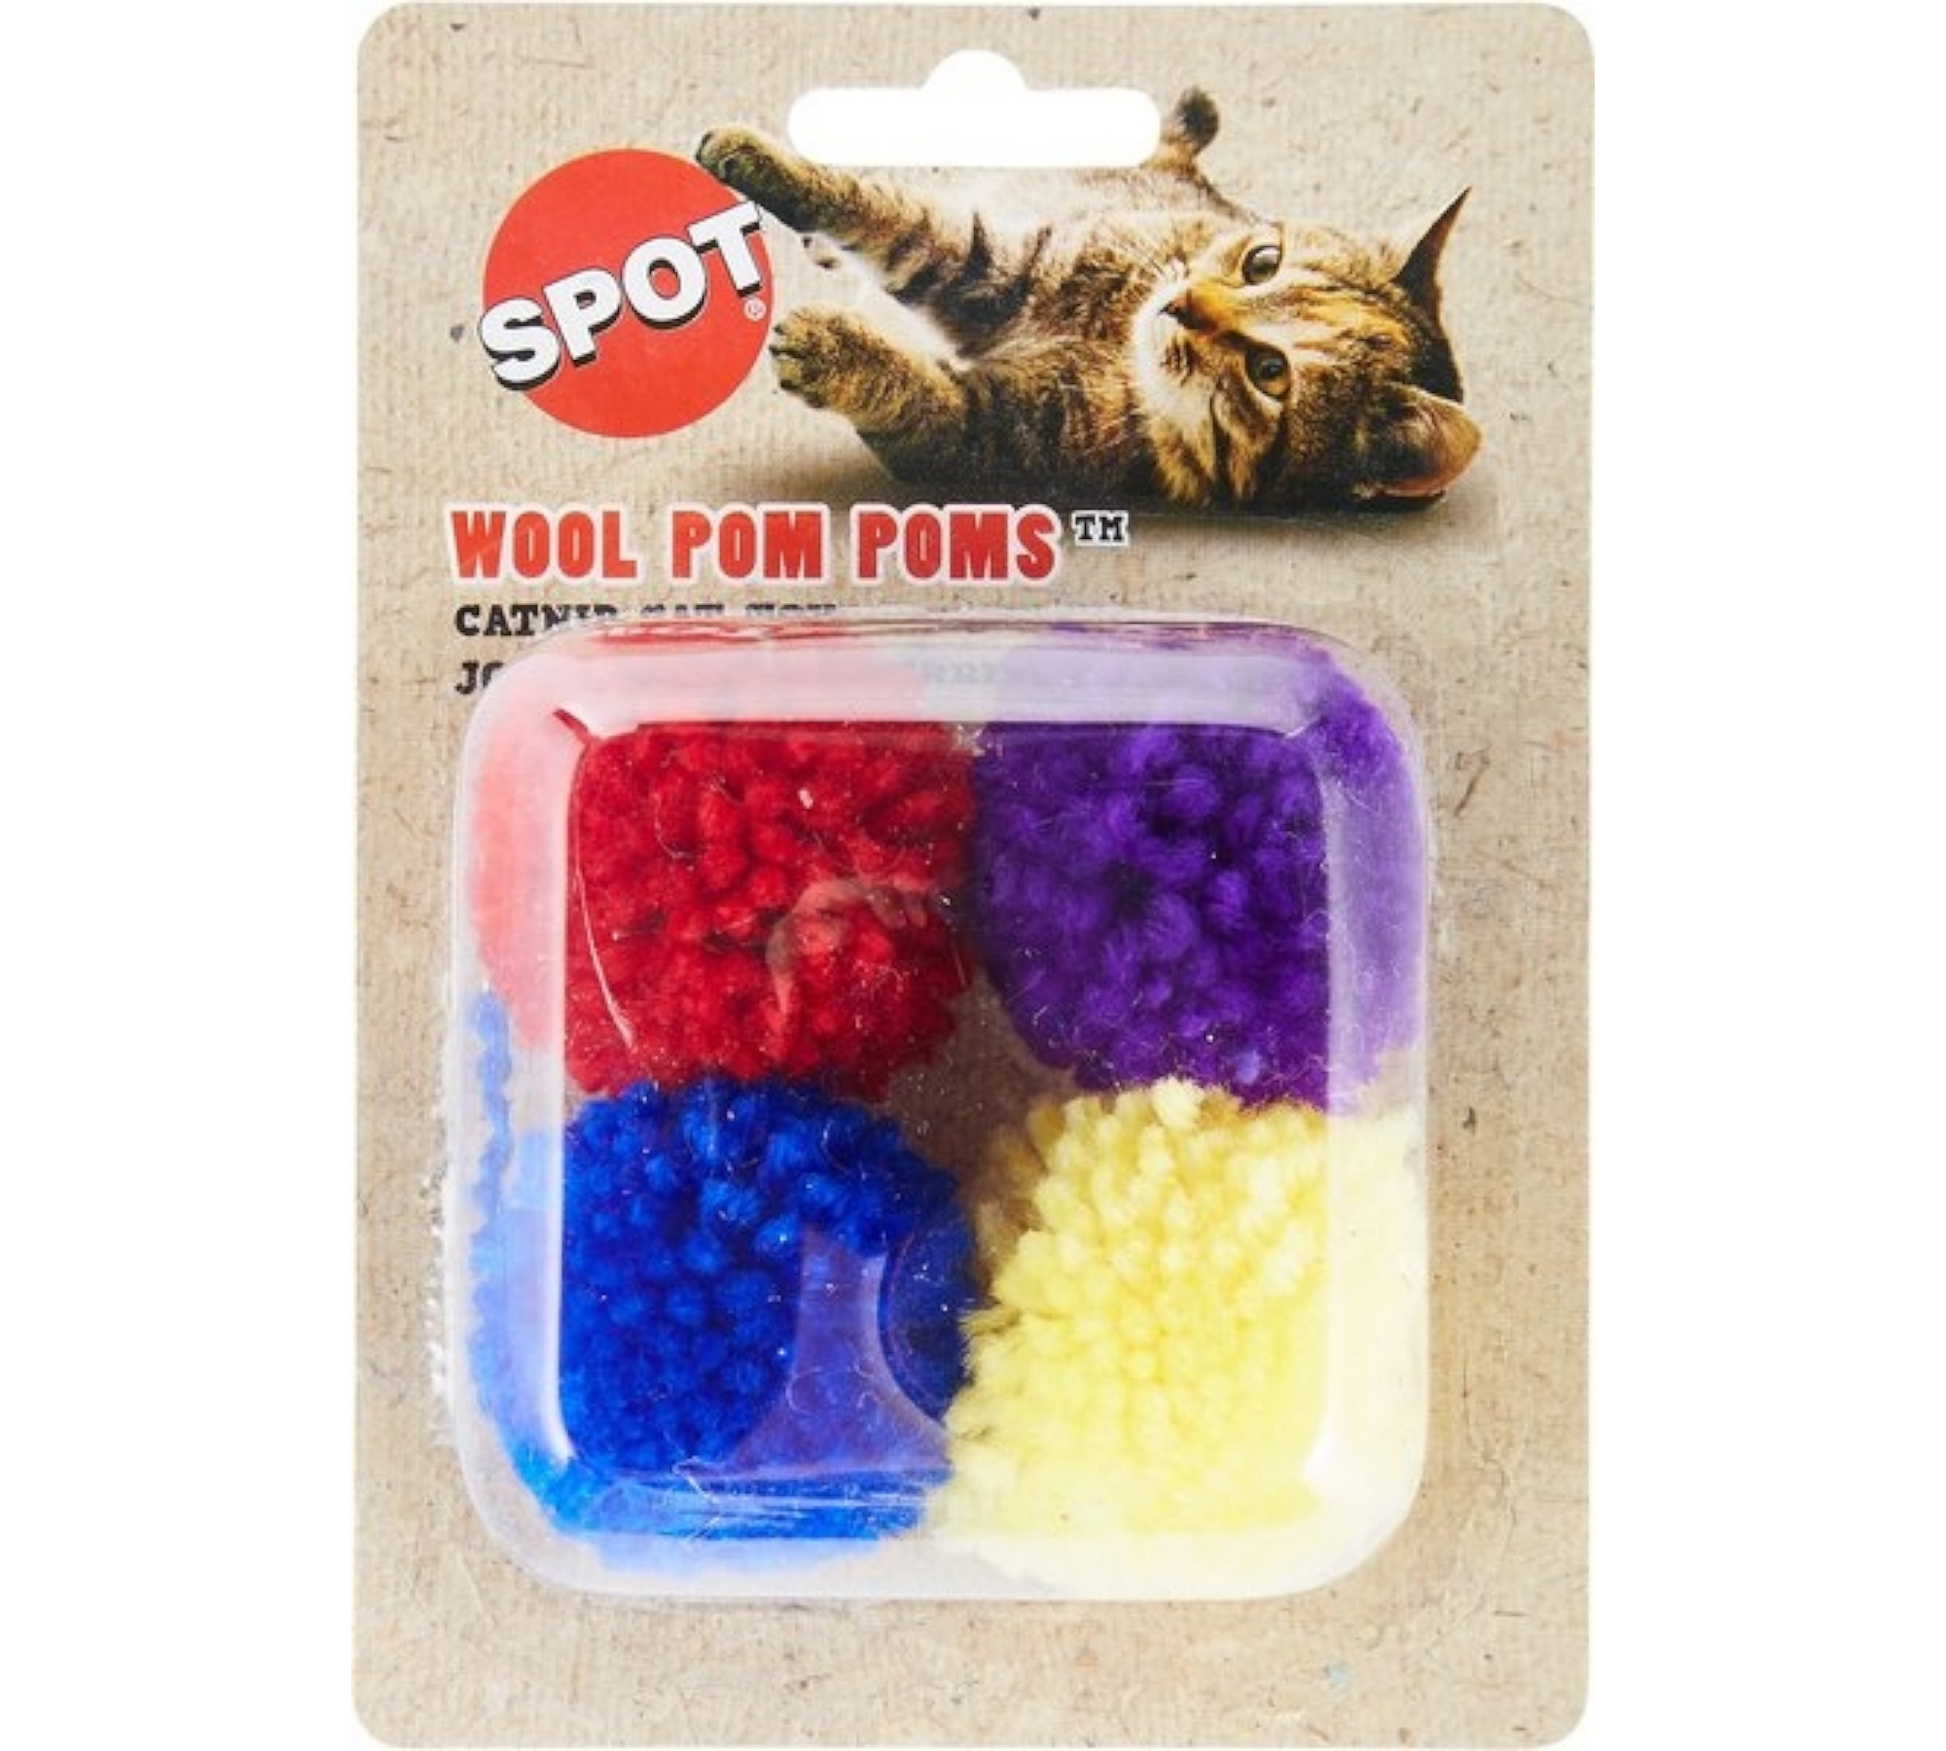 Canine's World Catnip Toys Spot Pet Wool Pom Poms Cat Toy with Catnip Spot